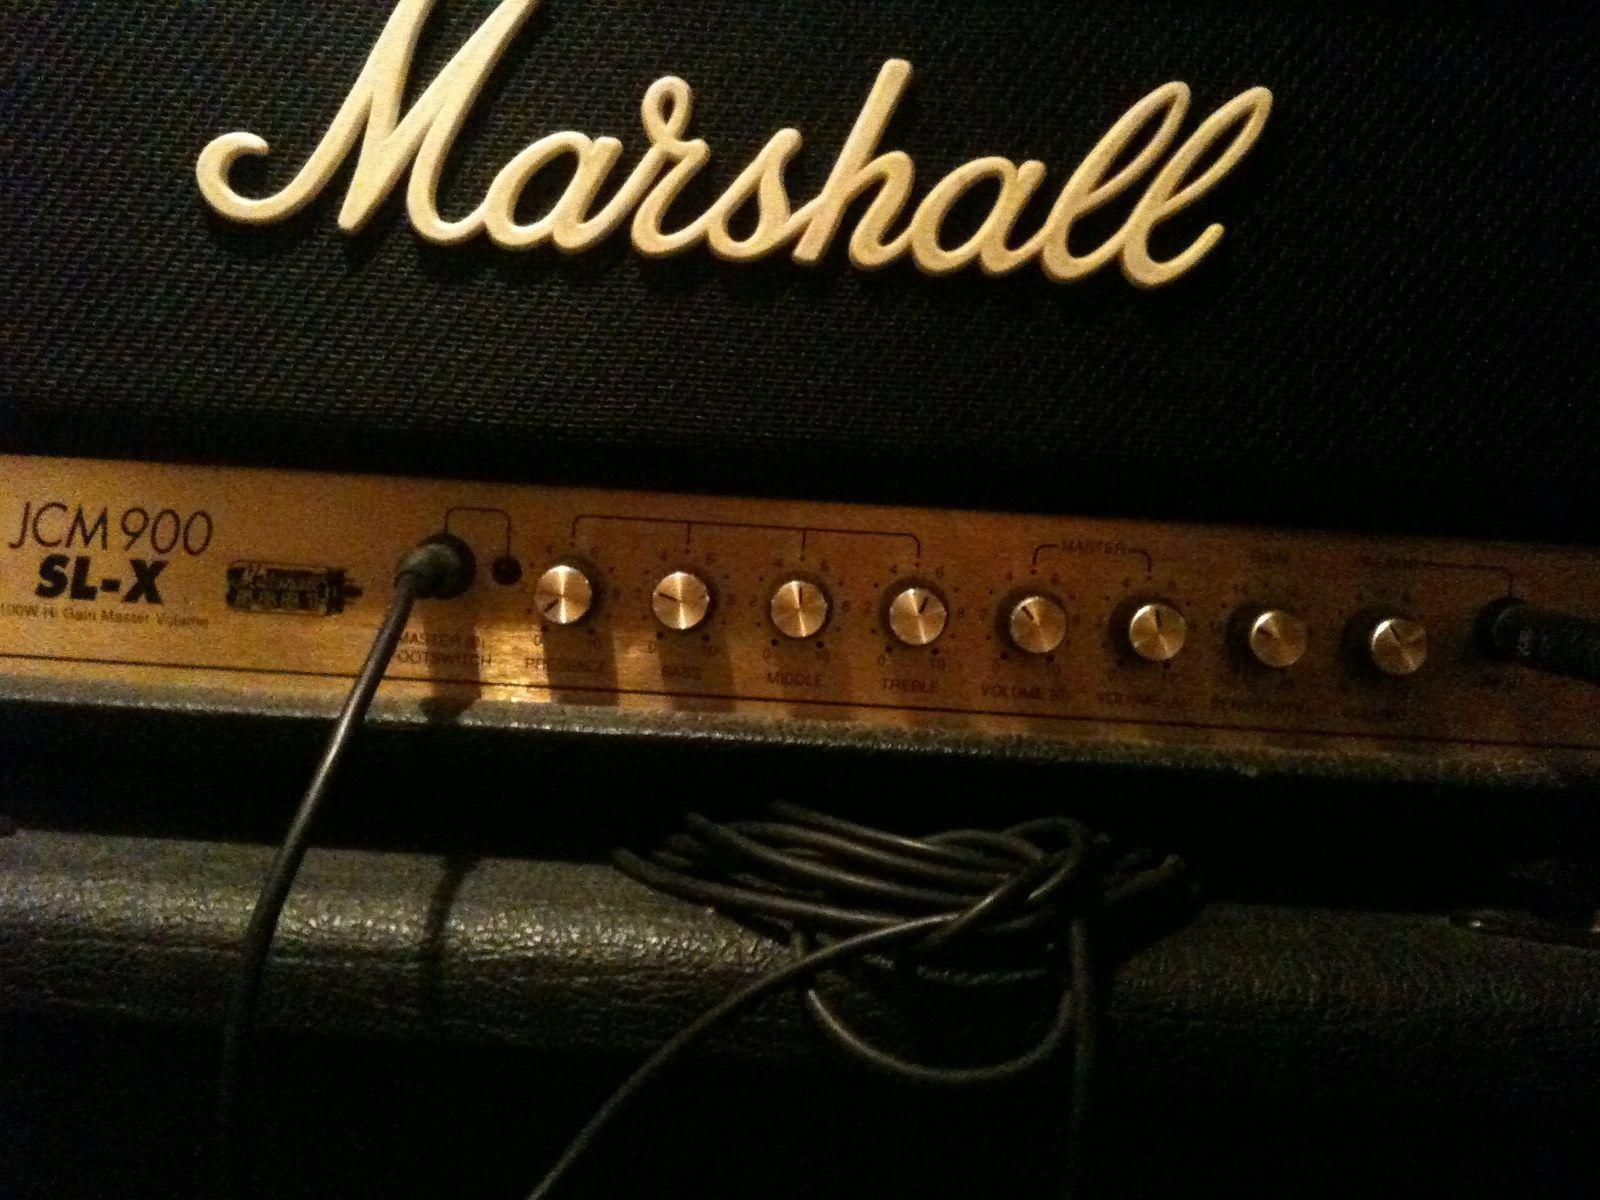 Amplifier Marshall JCM900 Music HD wallpaper